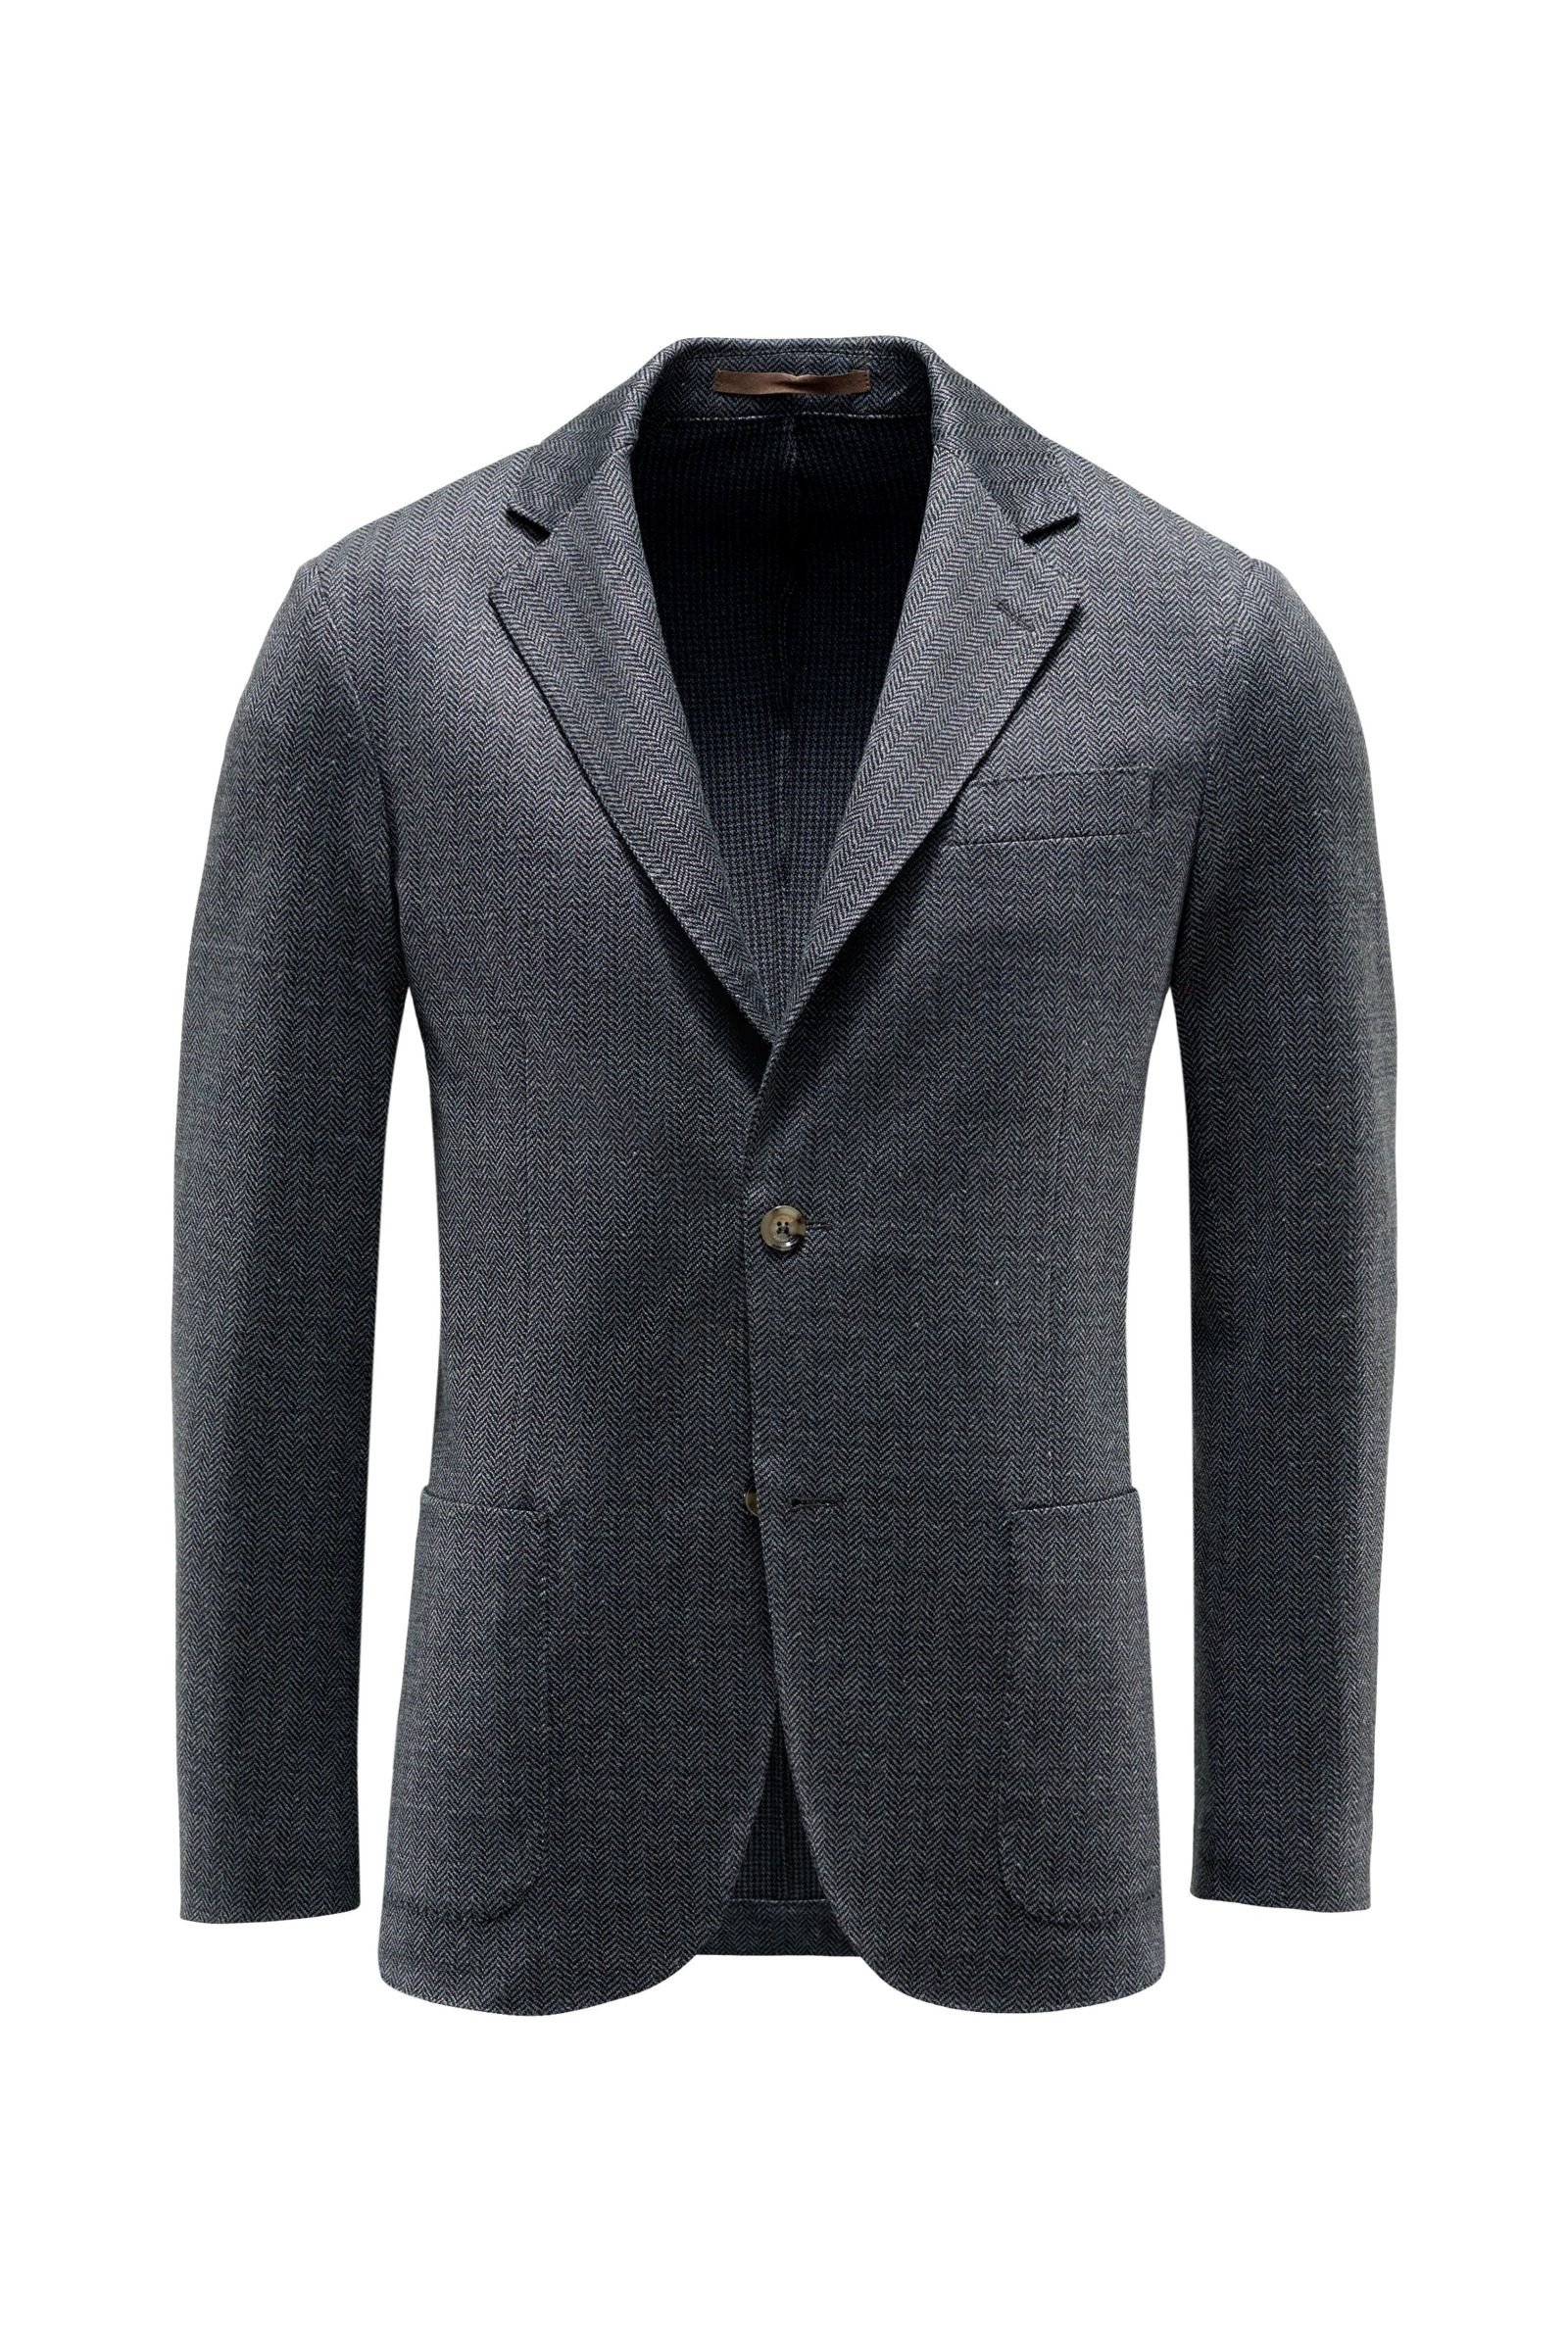 Jersey smart-casual jacket grey patterned